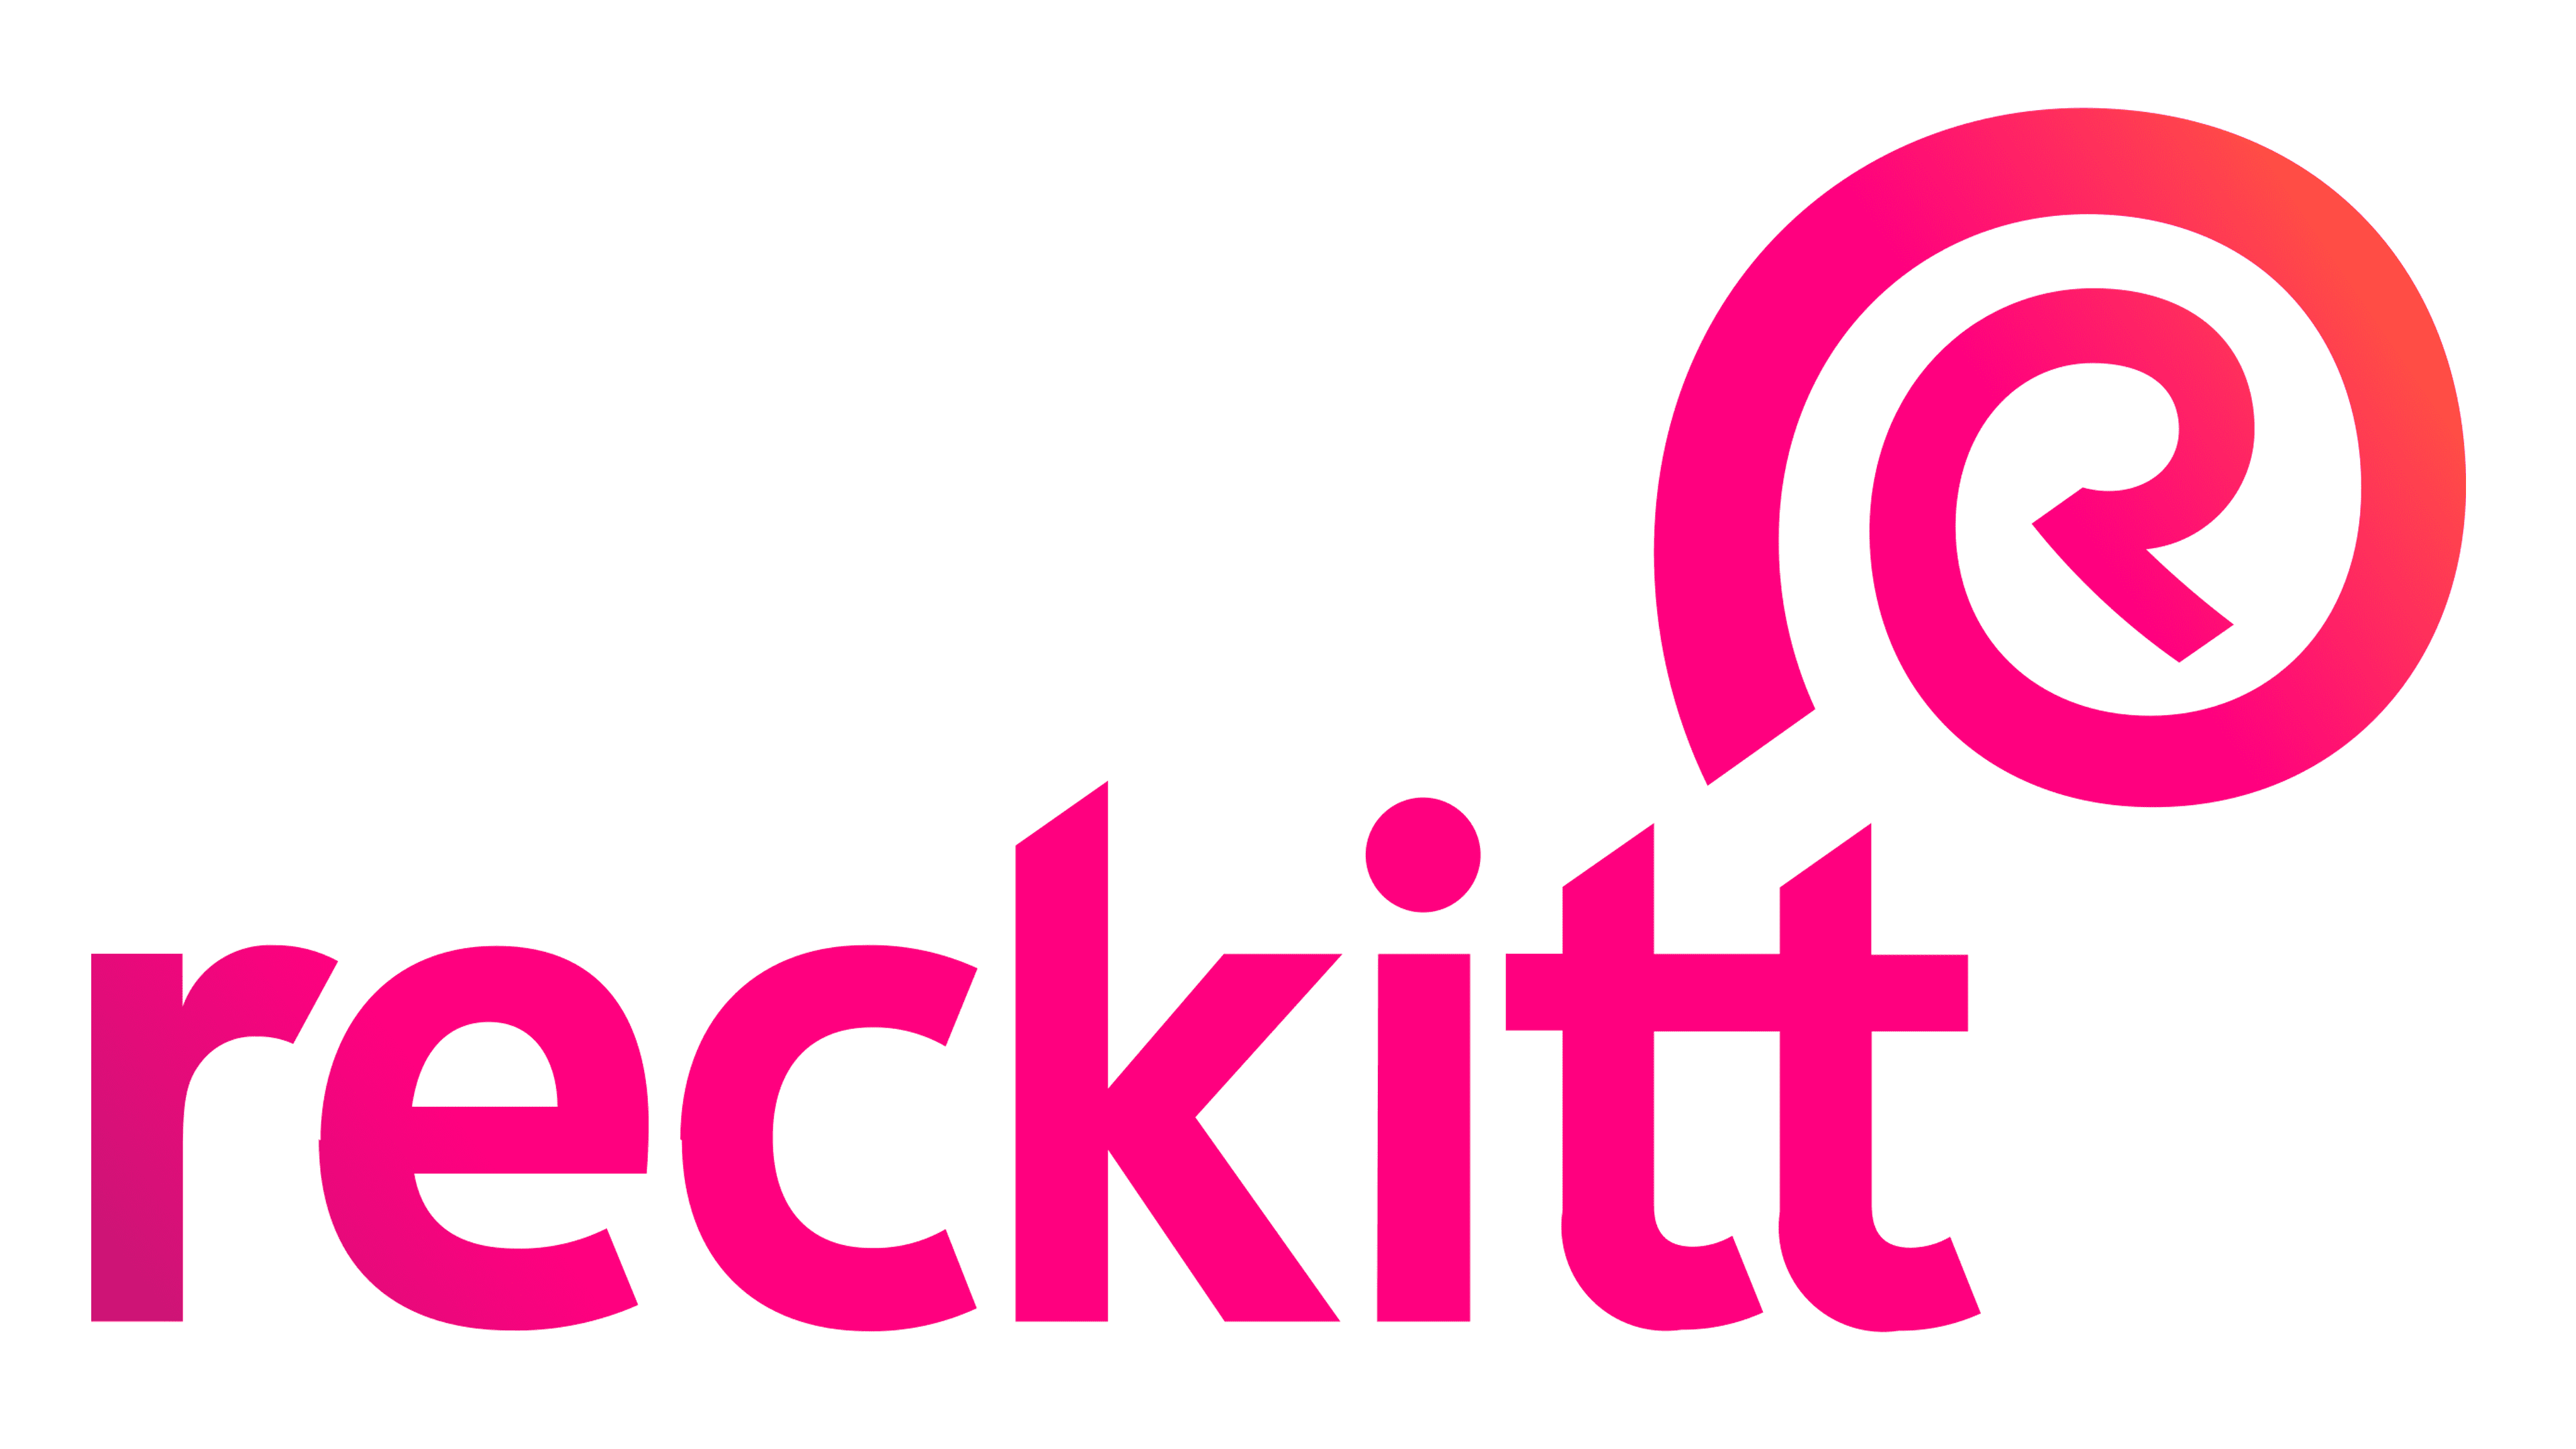 Logo de Reckitt Benckiser